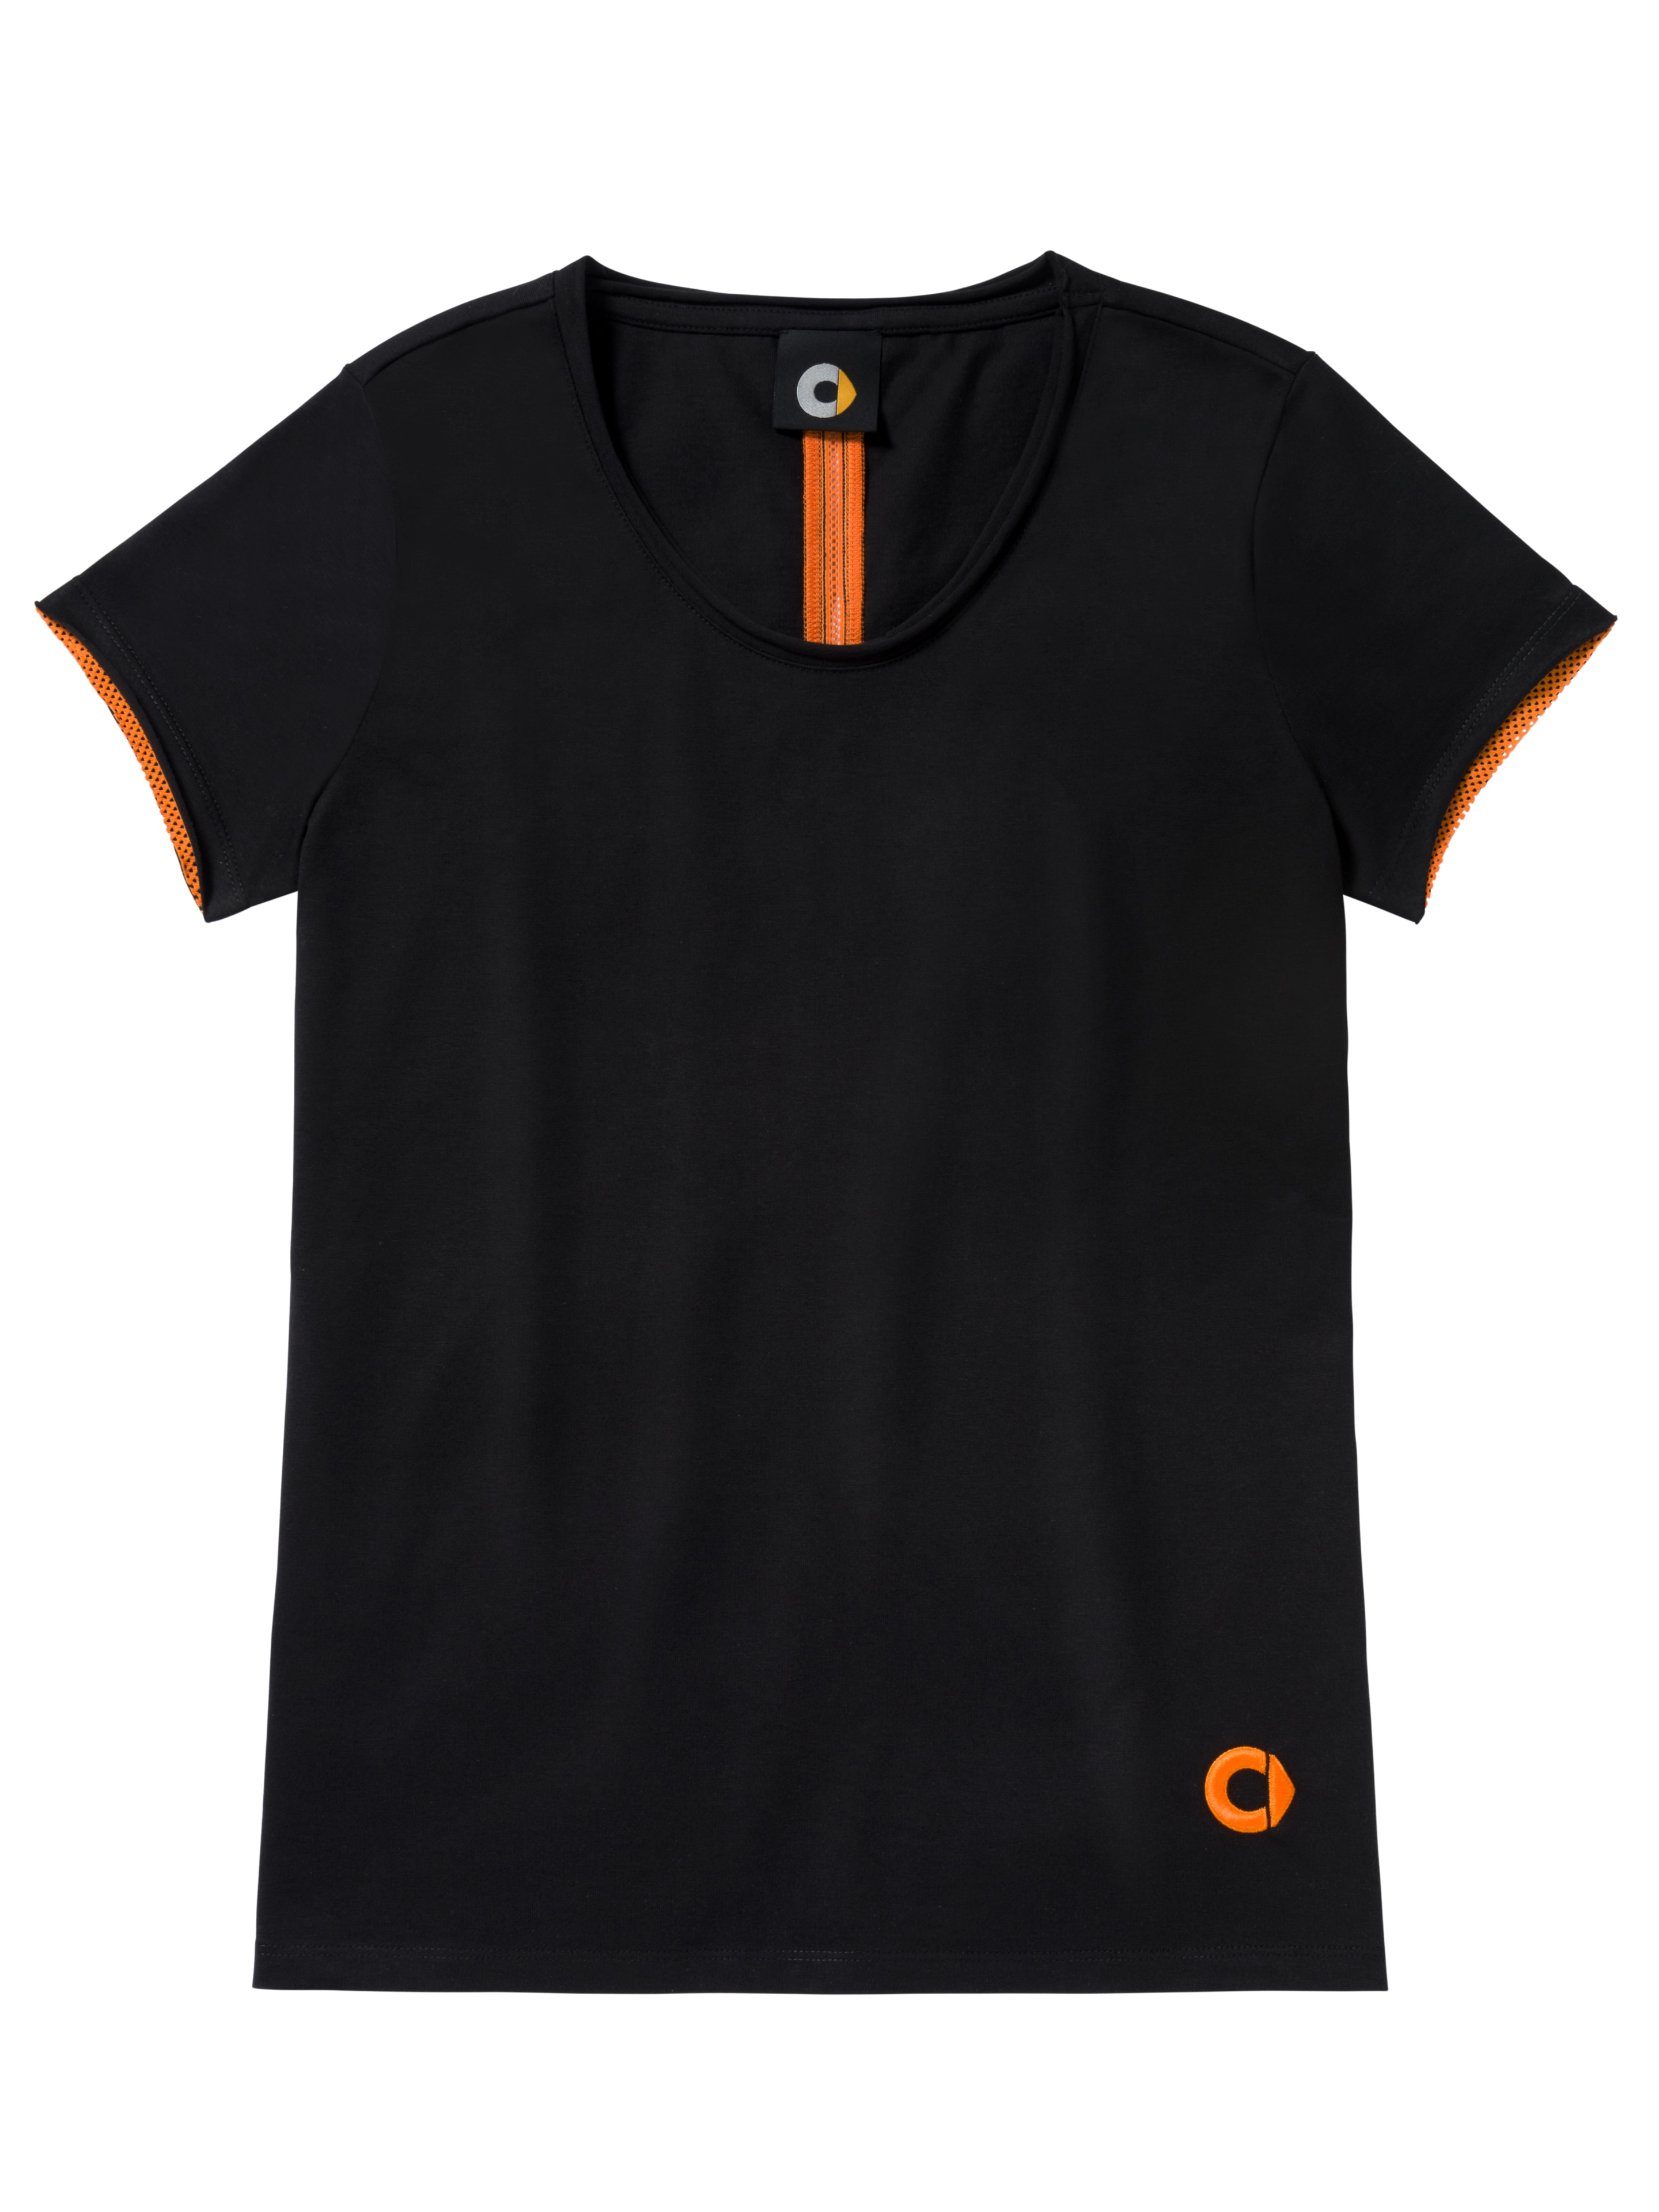 T-Shirt Damen - schwarz / orange, XL